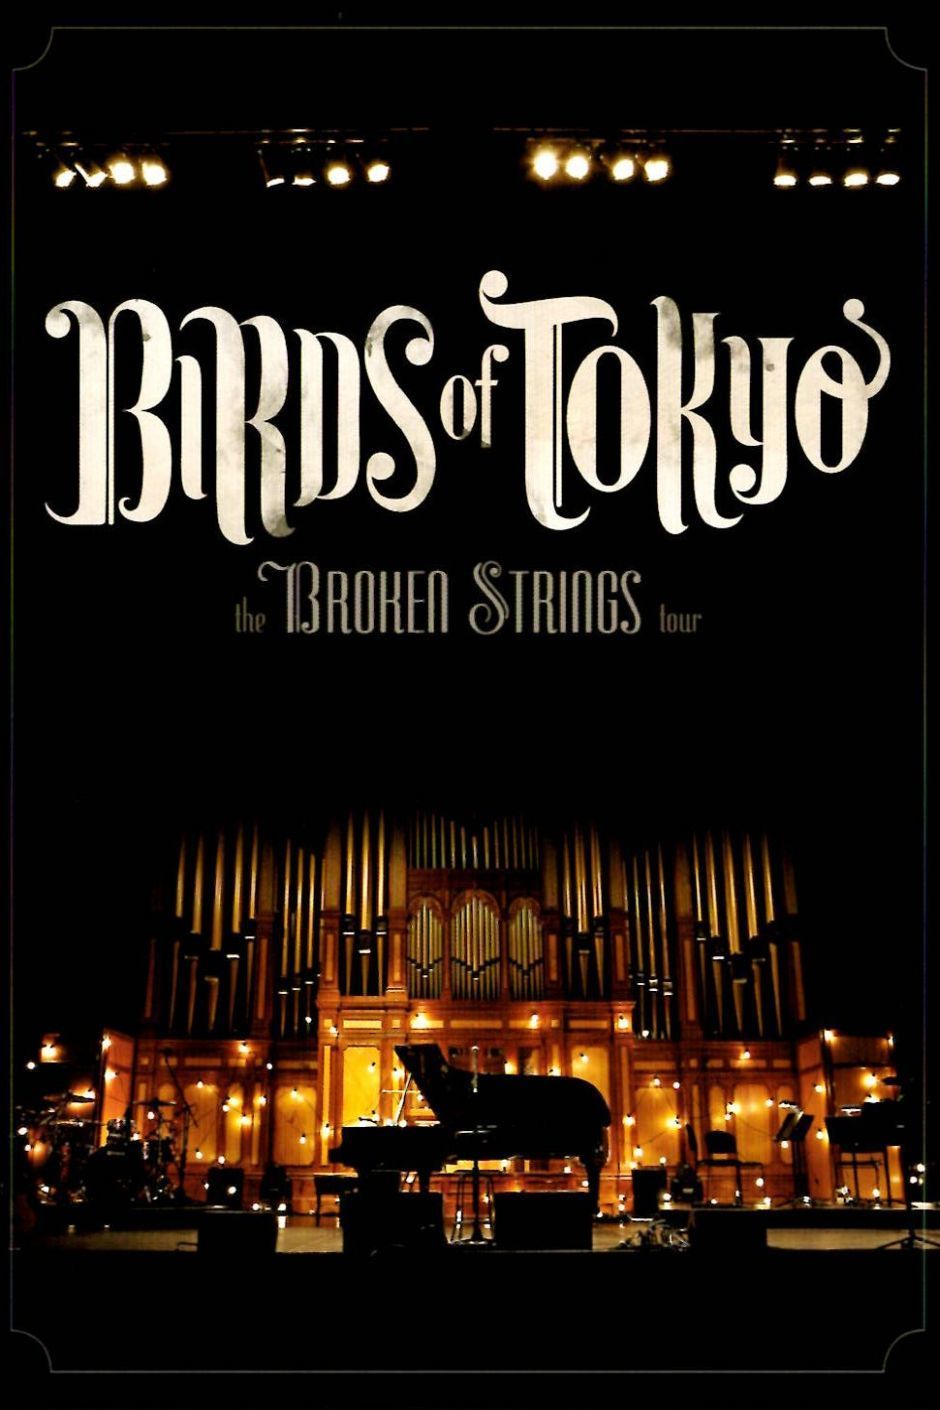 Birds of Tokyo - Broken Strings Tour